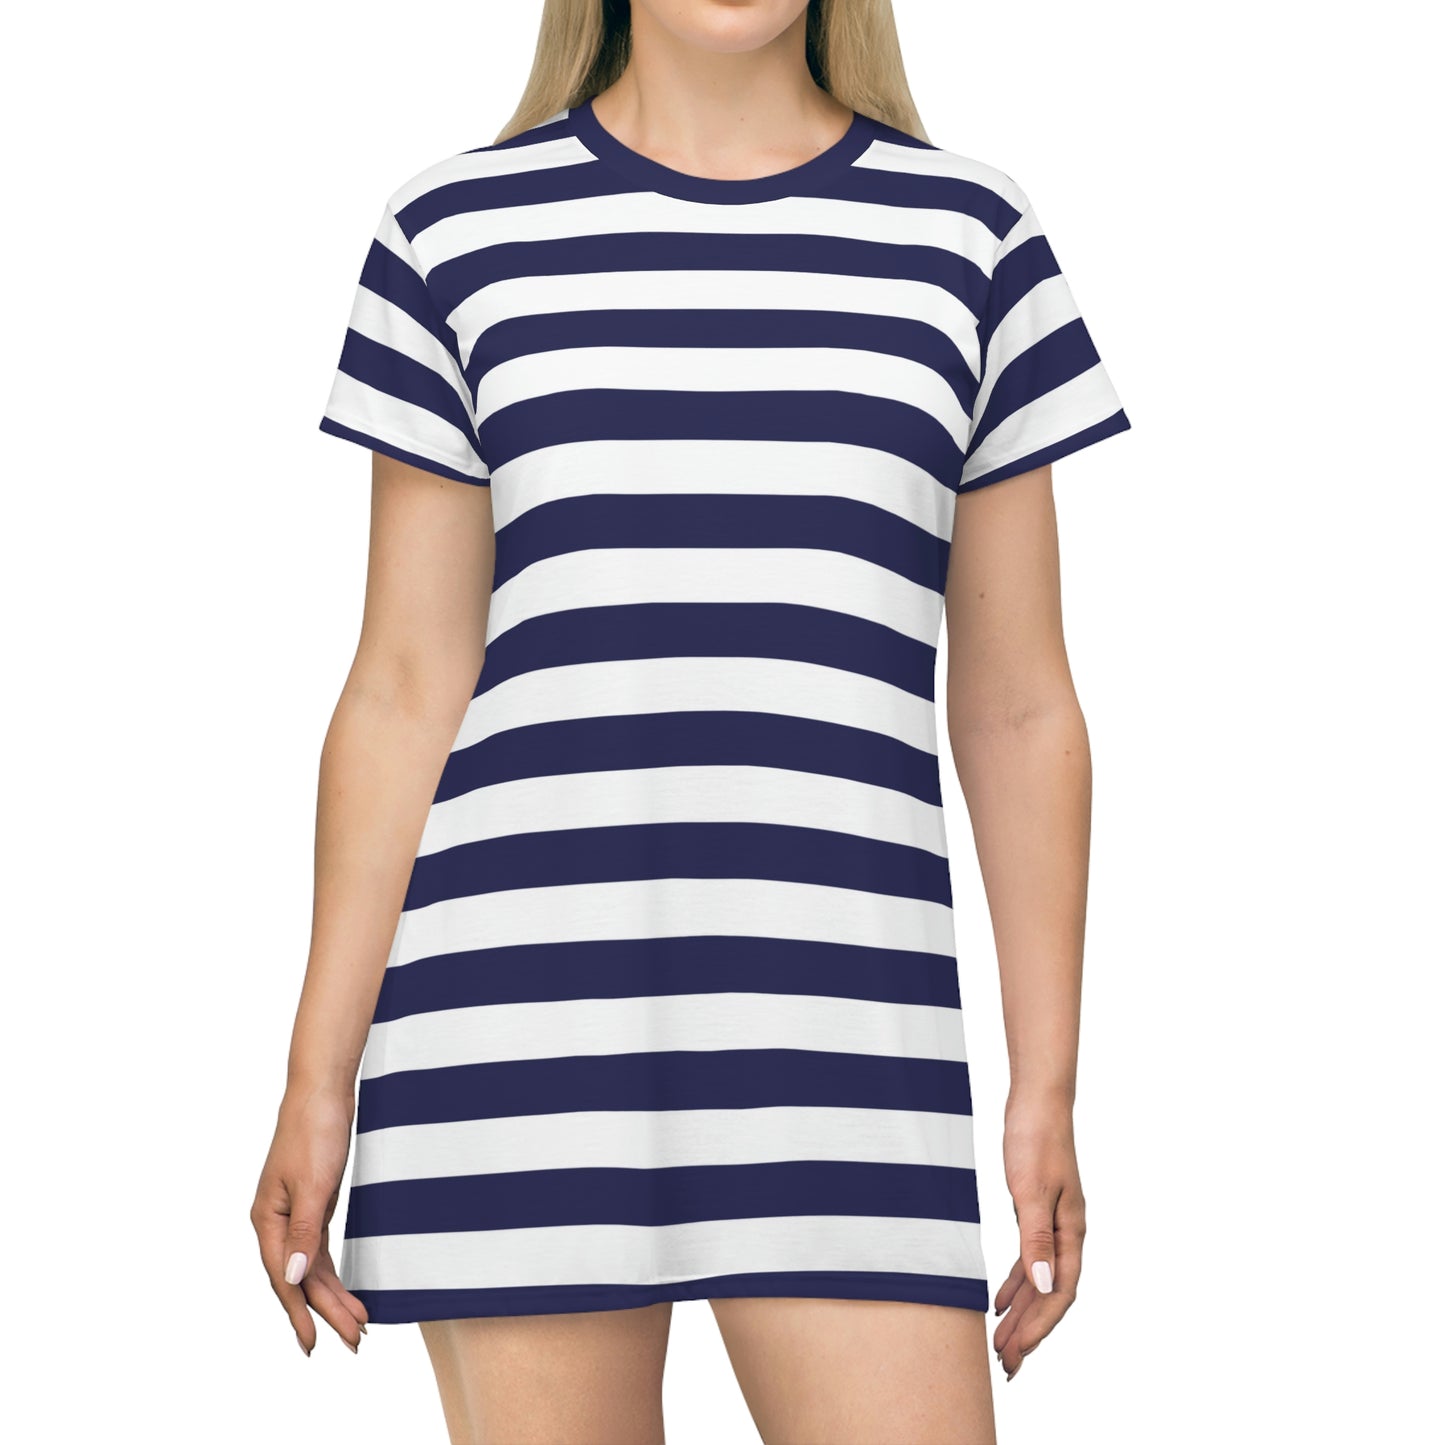 Blue White Striped Tshirt Dress, Navy Women Summer Beach Cute Festival Party Casual Designer Short Sleeve Girls Tee